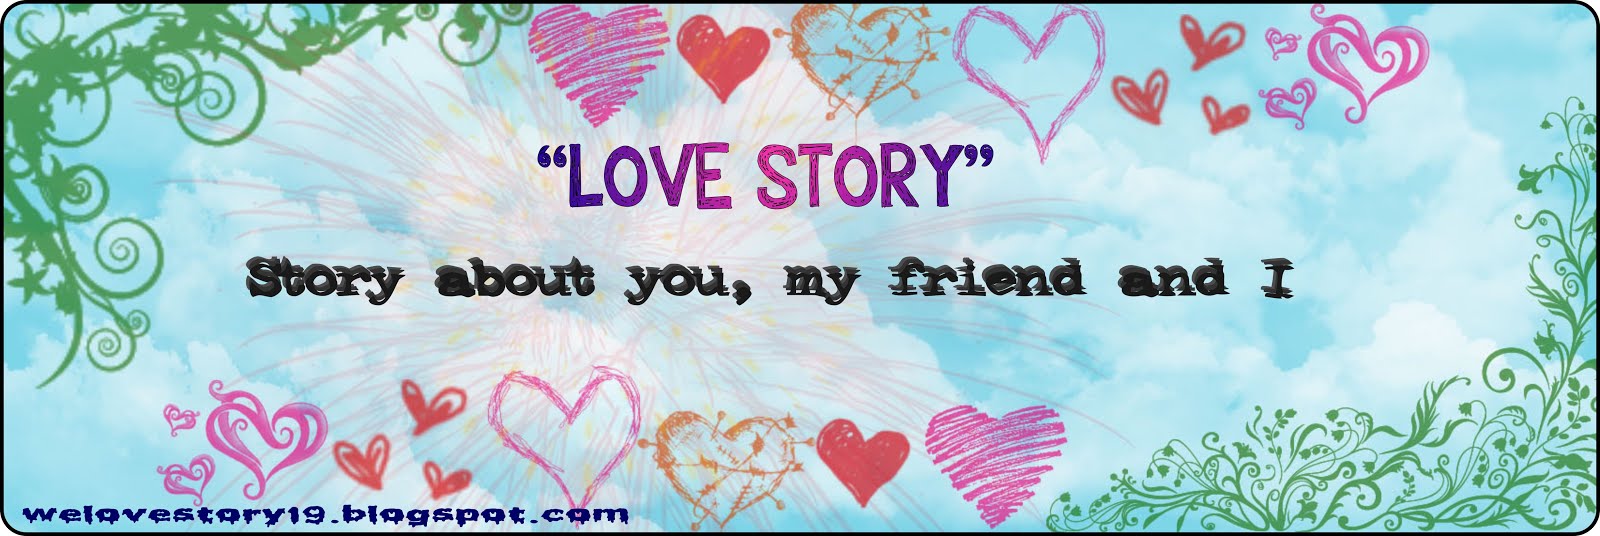 My Story: cerpen (cerita pendek) tentang kehidupan cinta 